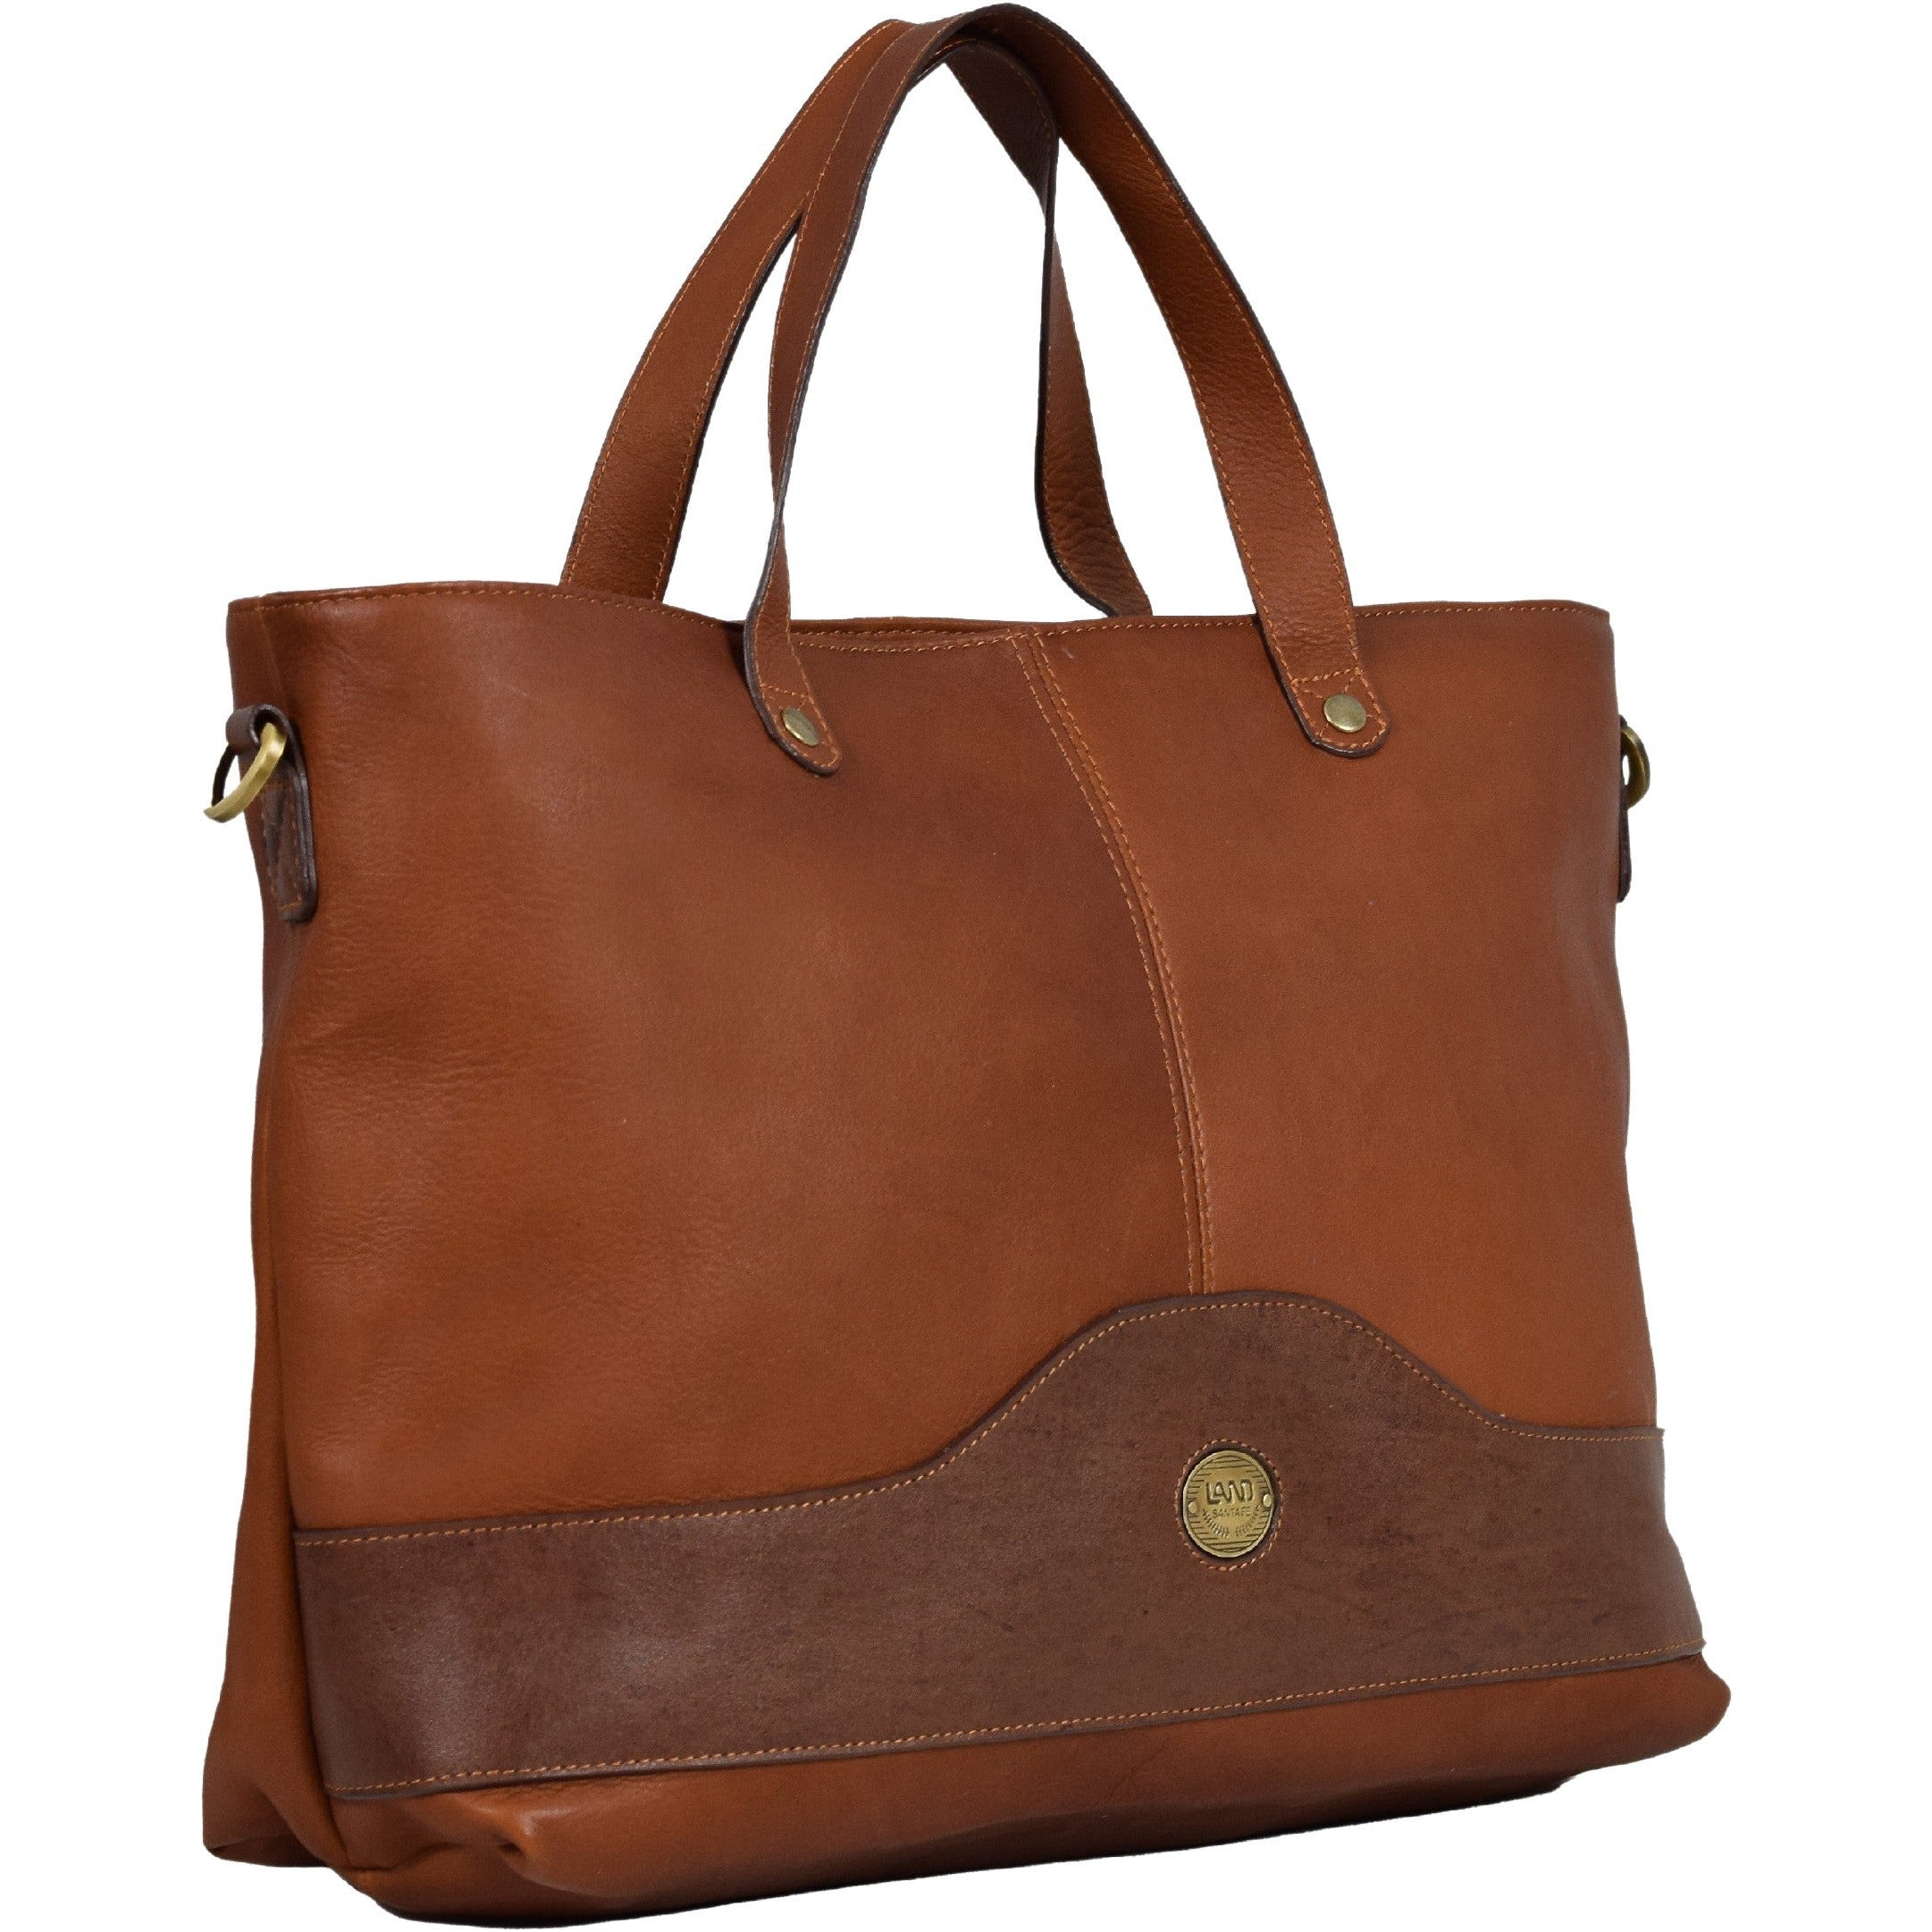 Santa Fe Journey Travel Bag - LAND Leather Goods